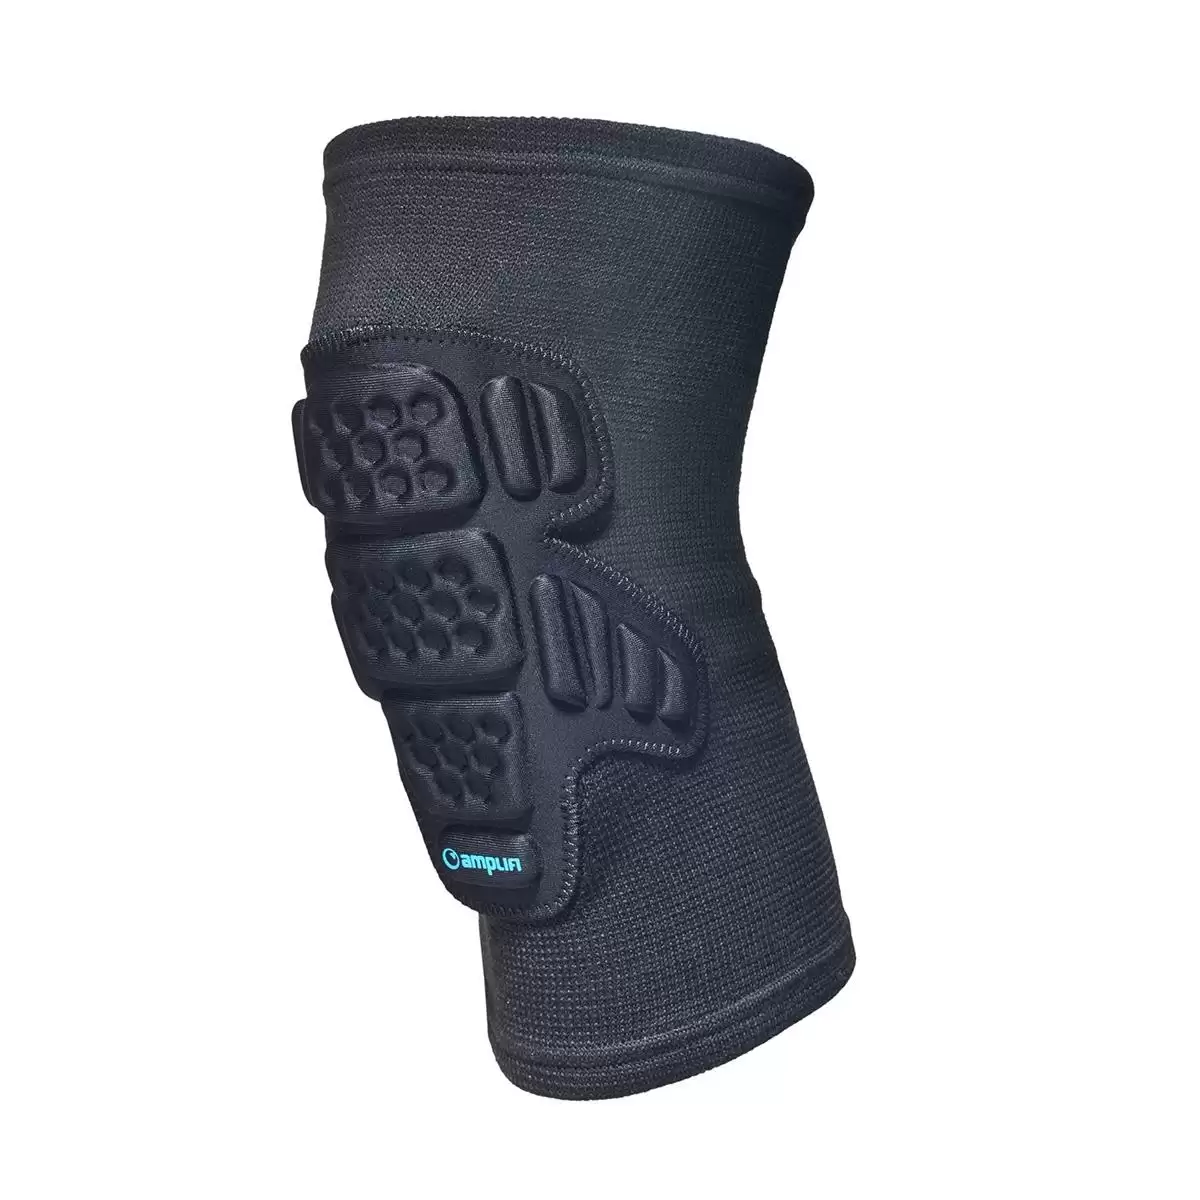 Sleeve 3D Knee guards Black Size L - image